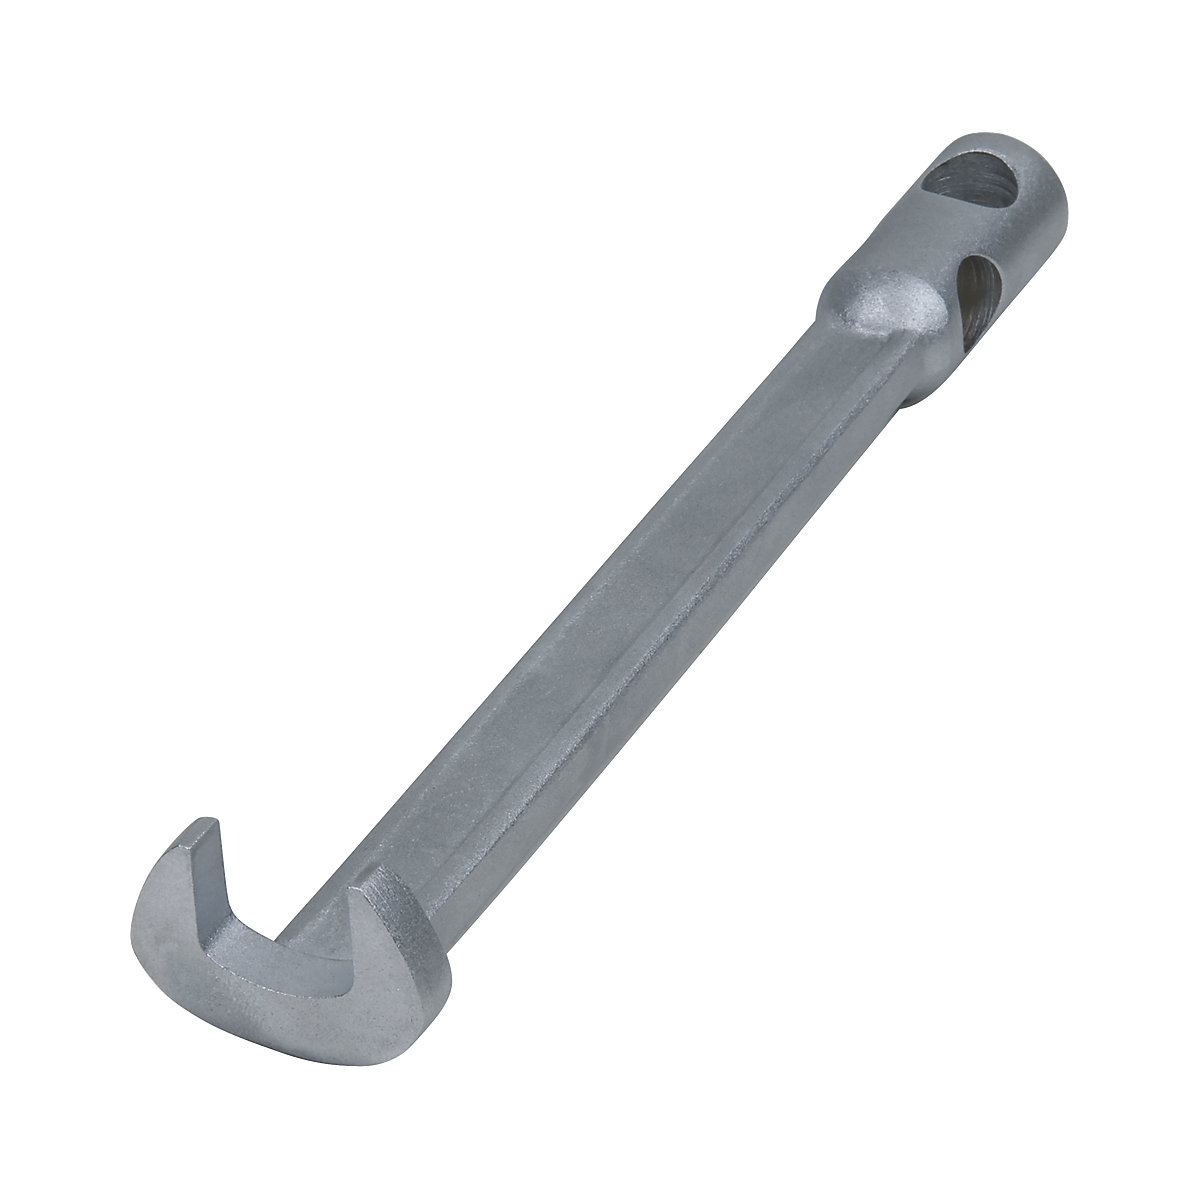 Pronged wrench - KS Tools